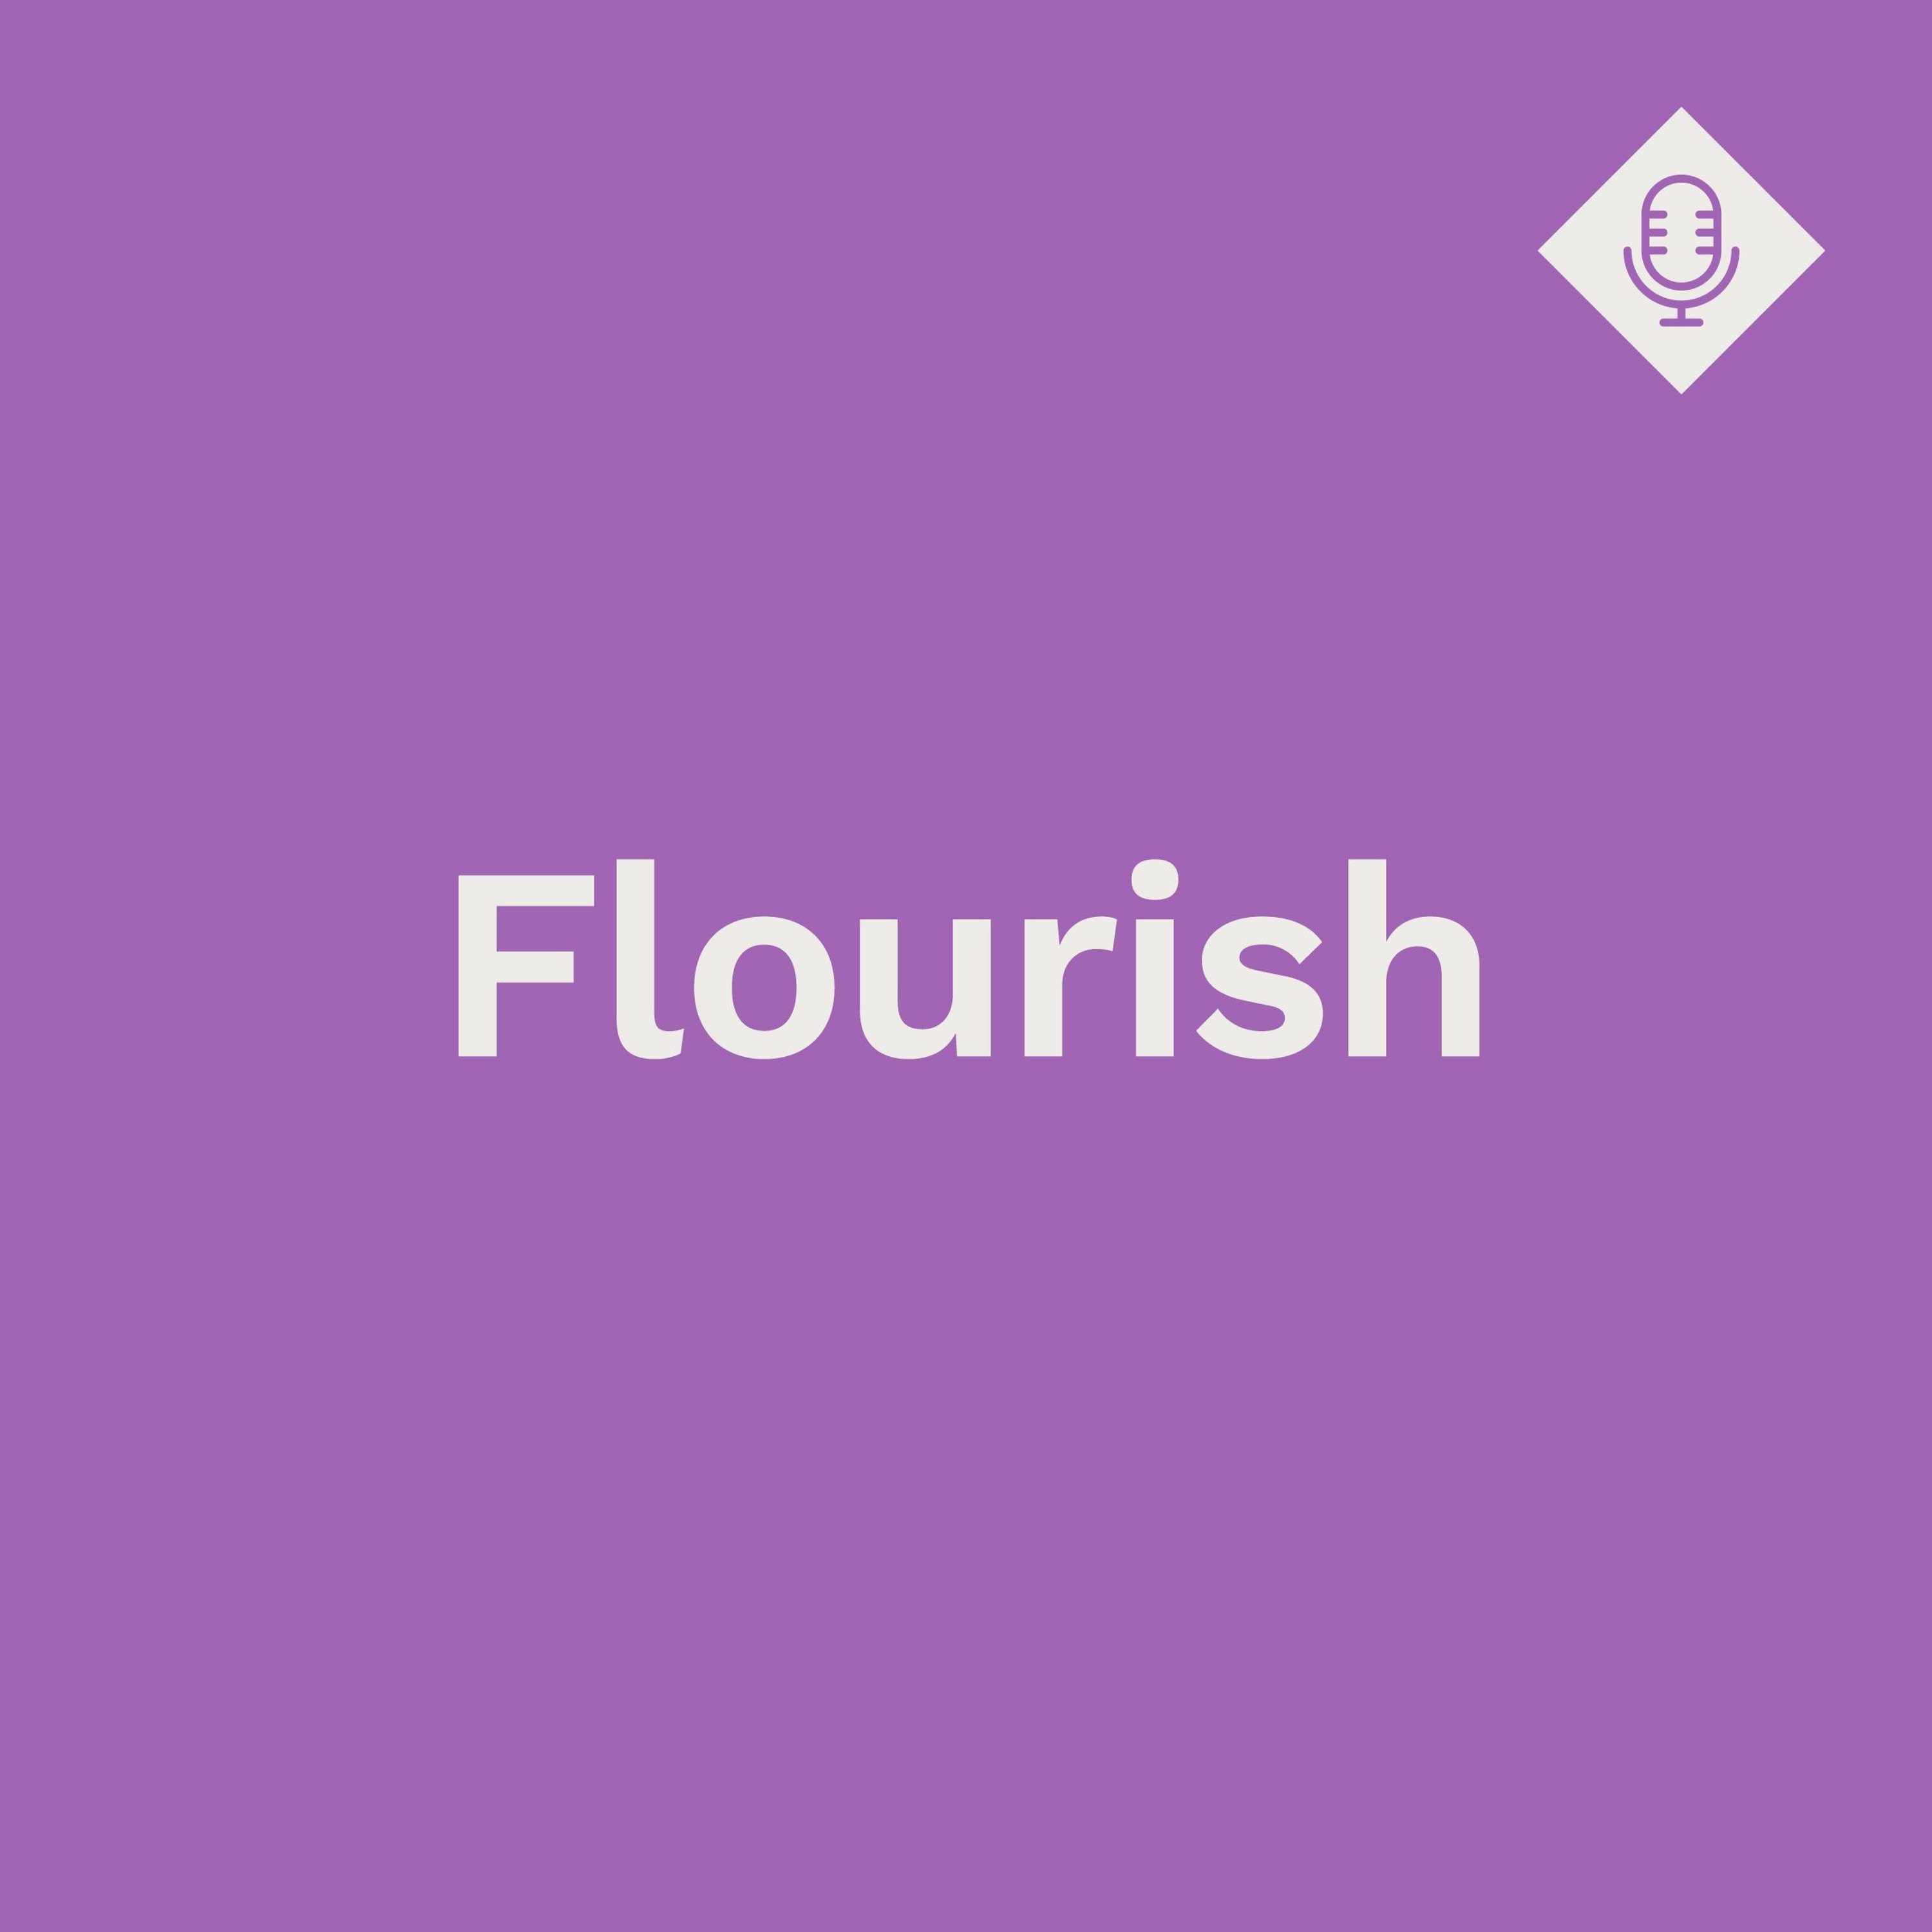 ’Flourish’ / Neil Dawson